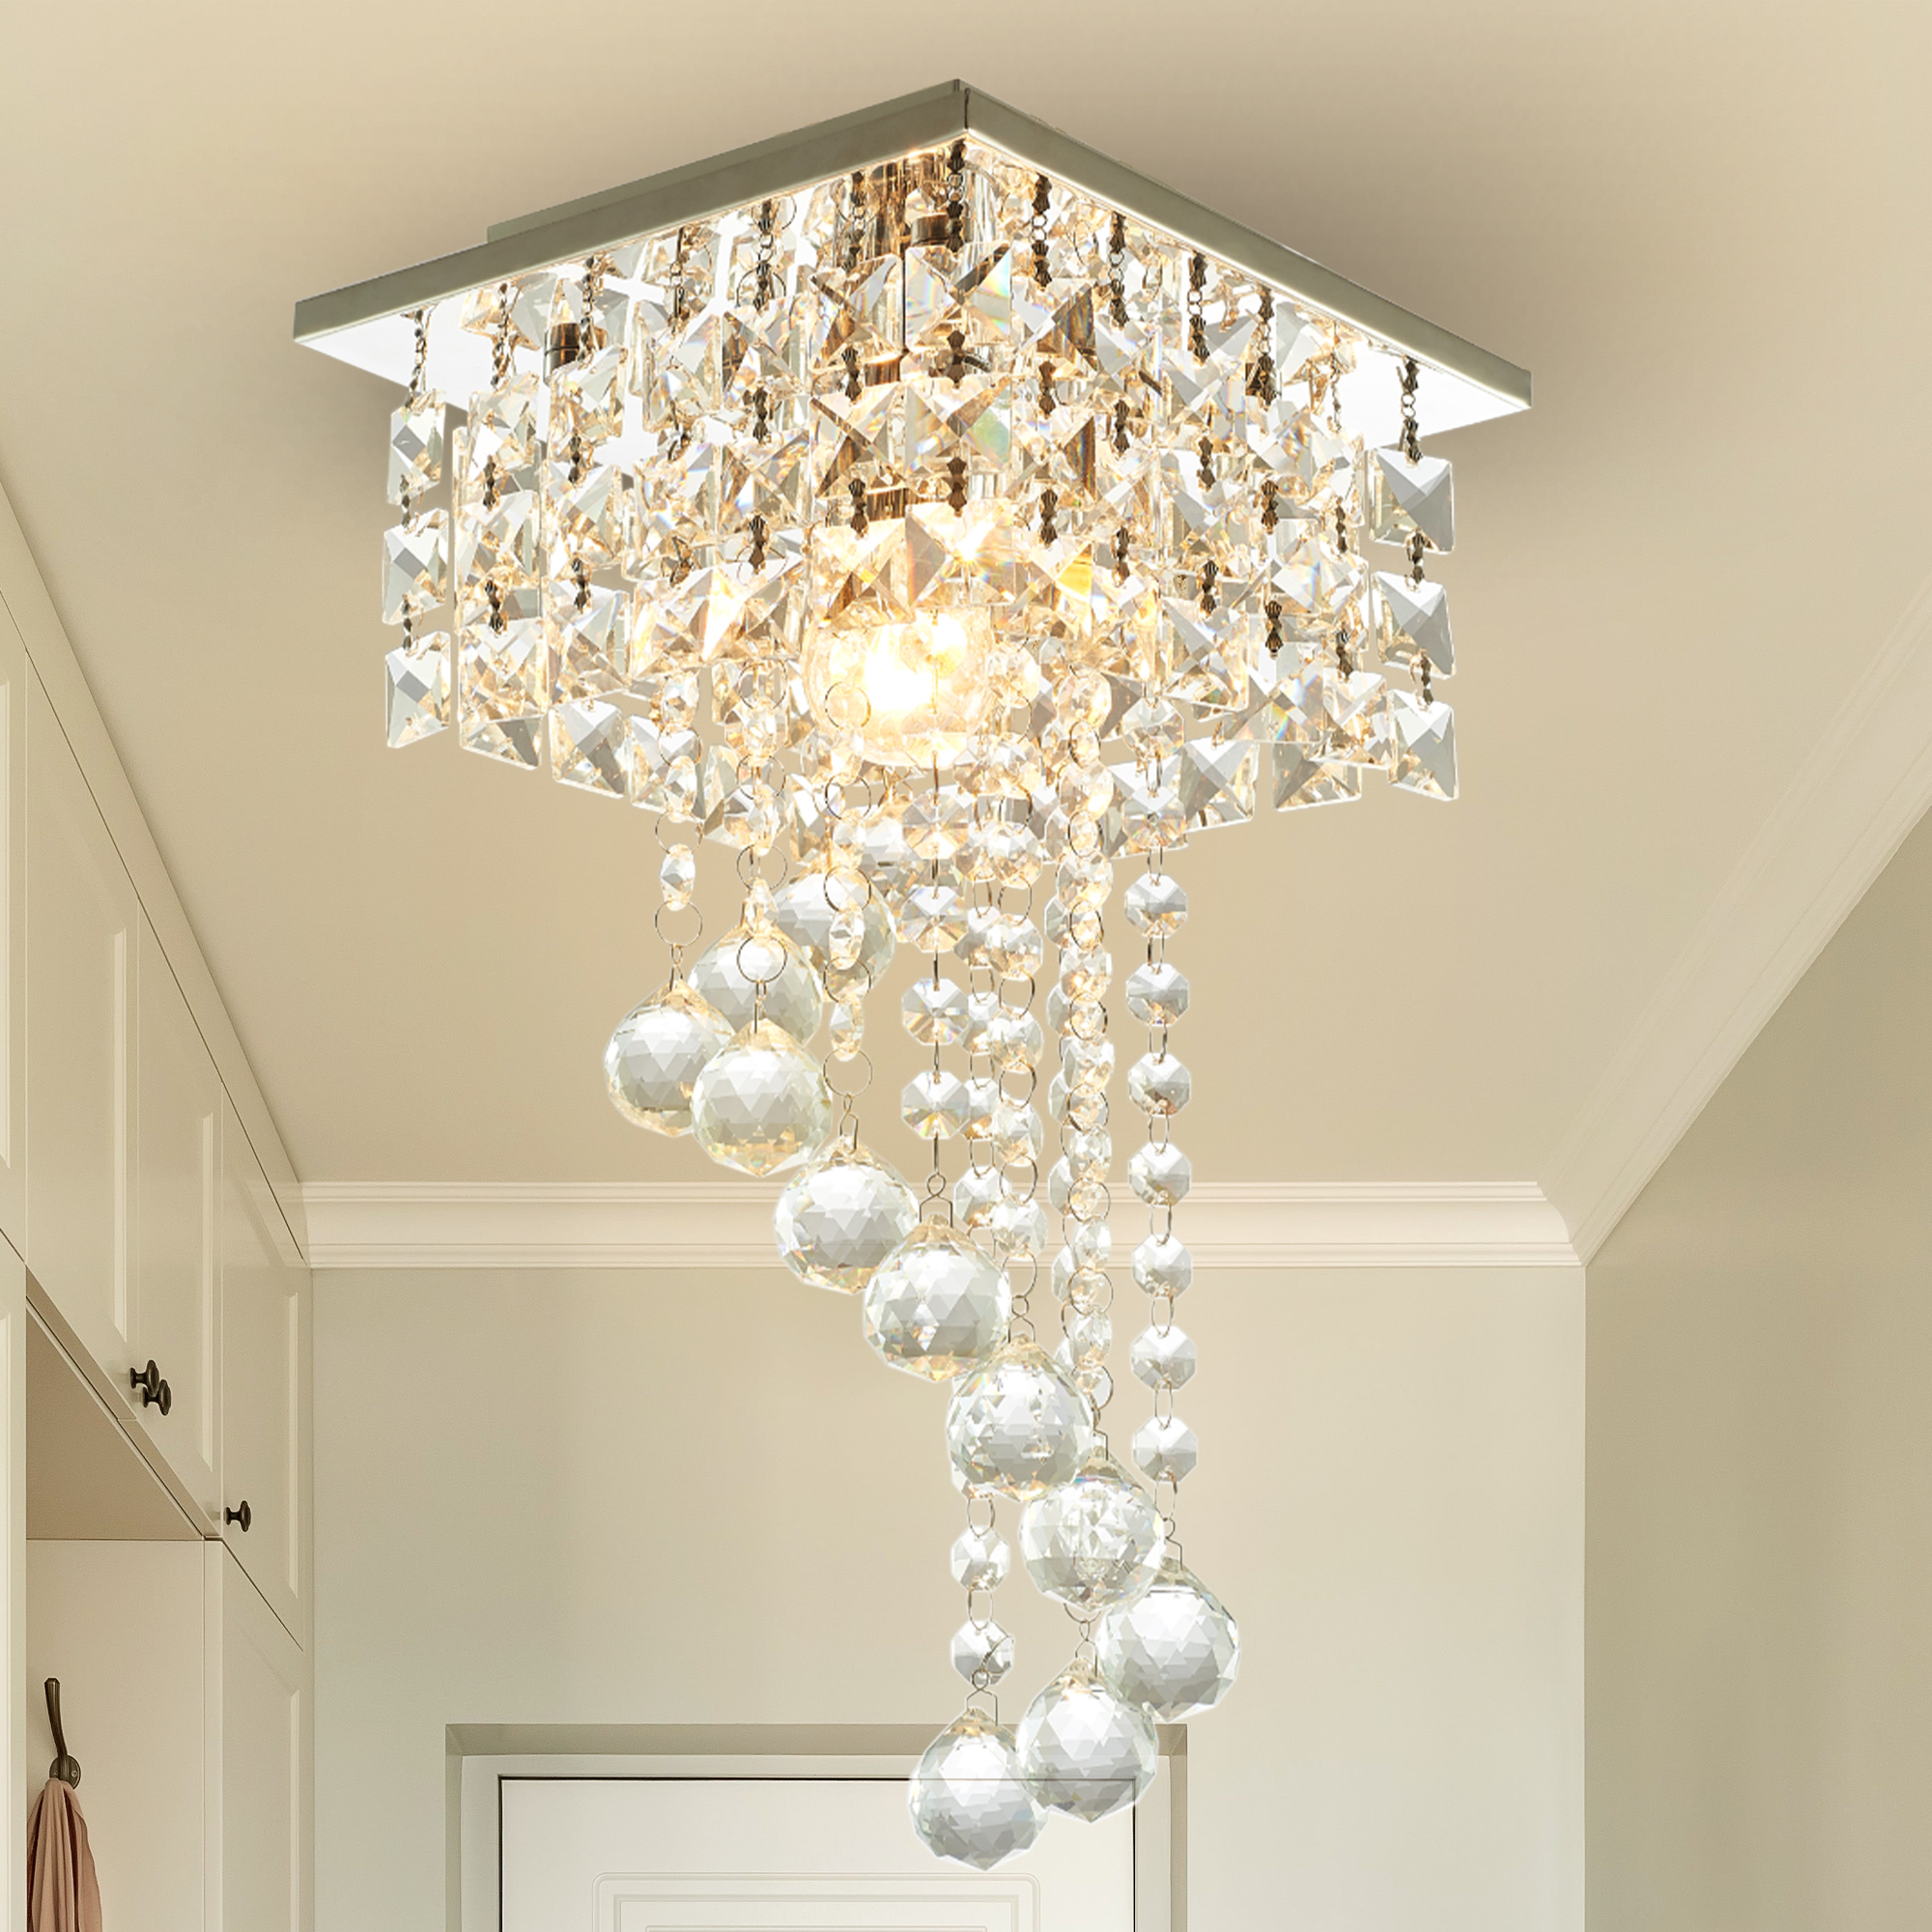 Mini Crystal Chandelier, Modern Ceiling Light Fixture Flush Mount Pendant Lighting for Bedroom, Living Room, Dining Room, Hallway, Kitchen